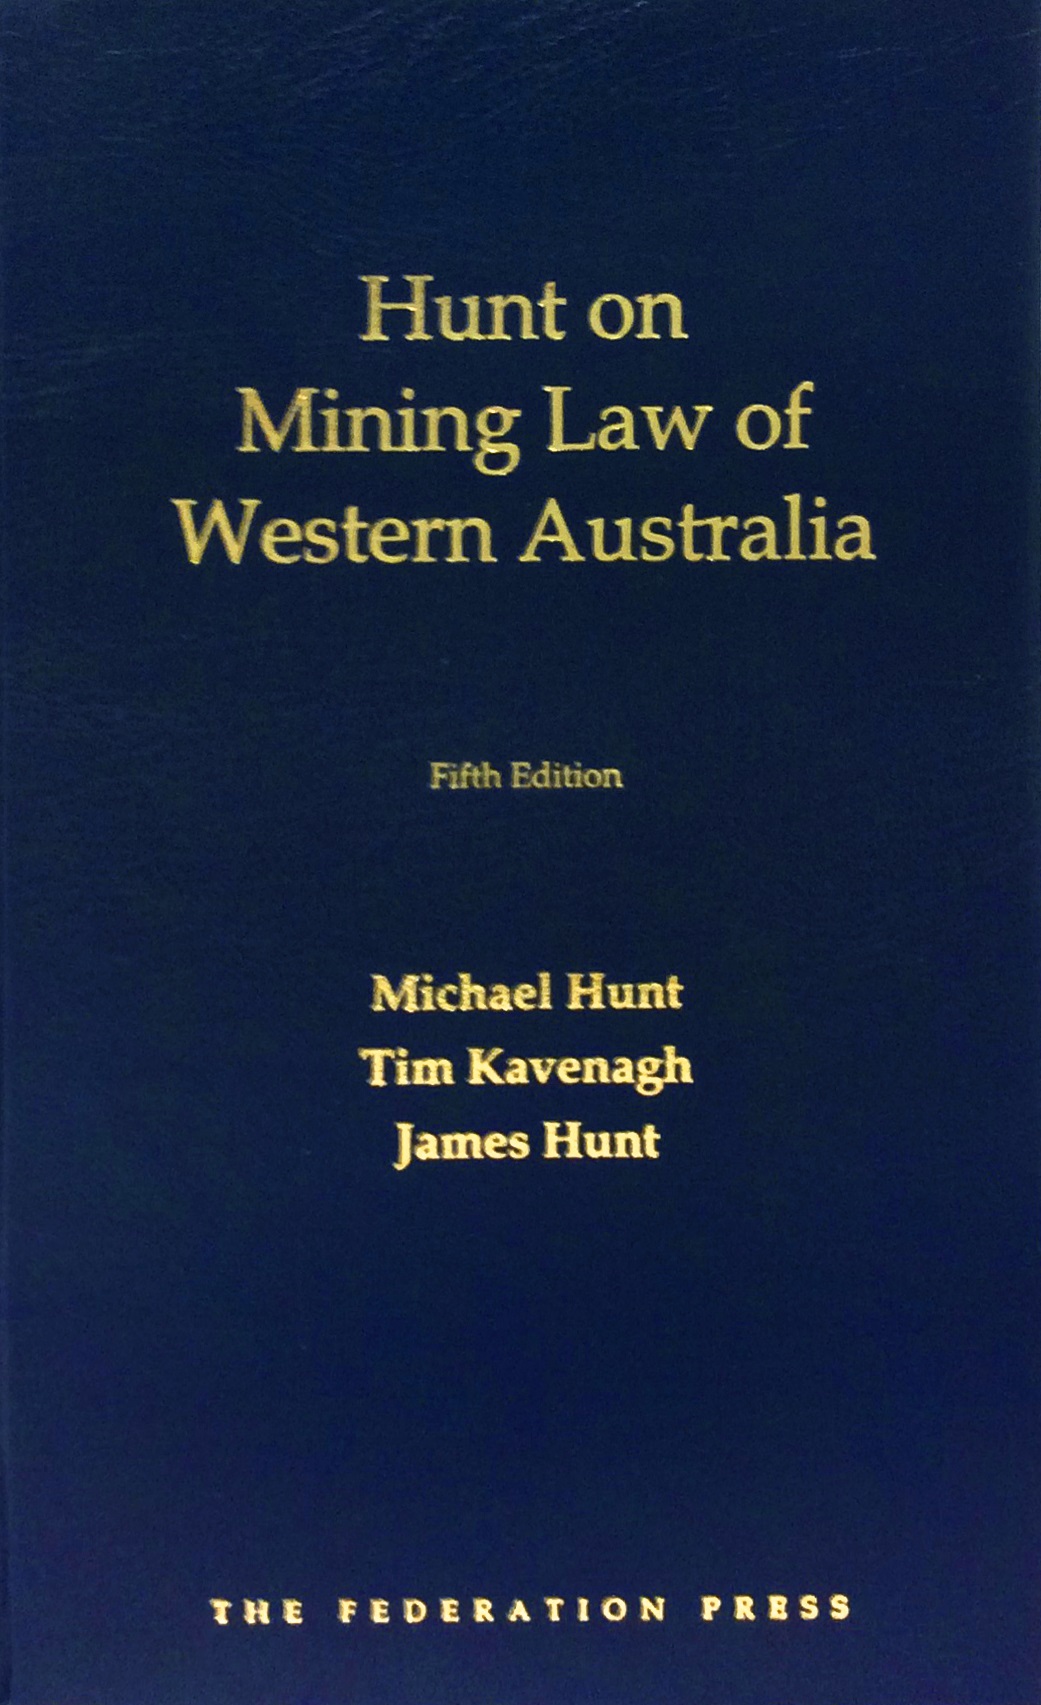 Hunt on Mining Law of Western Australia e5